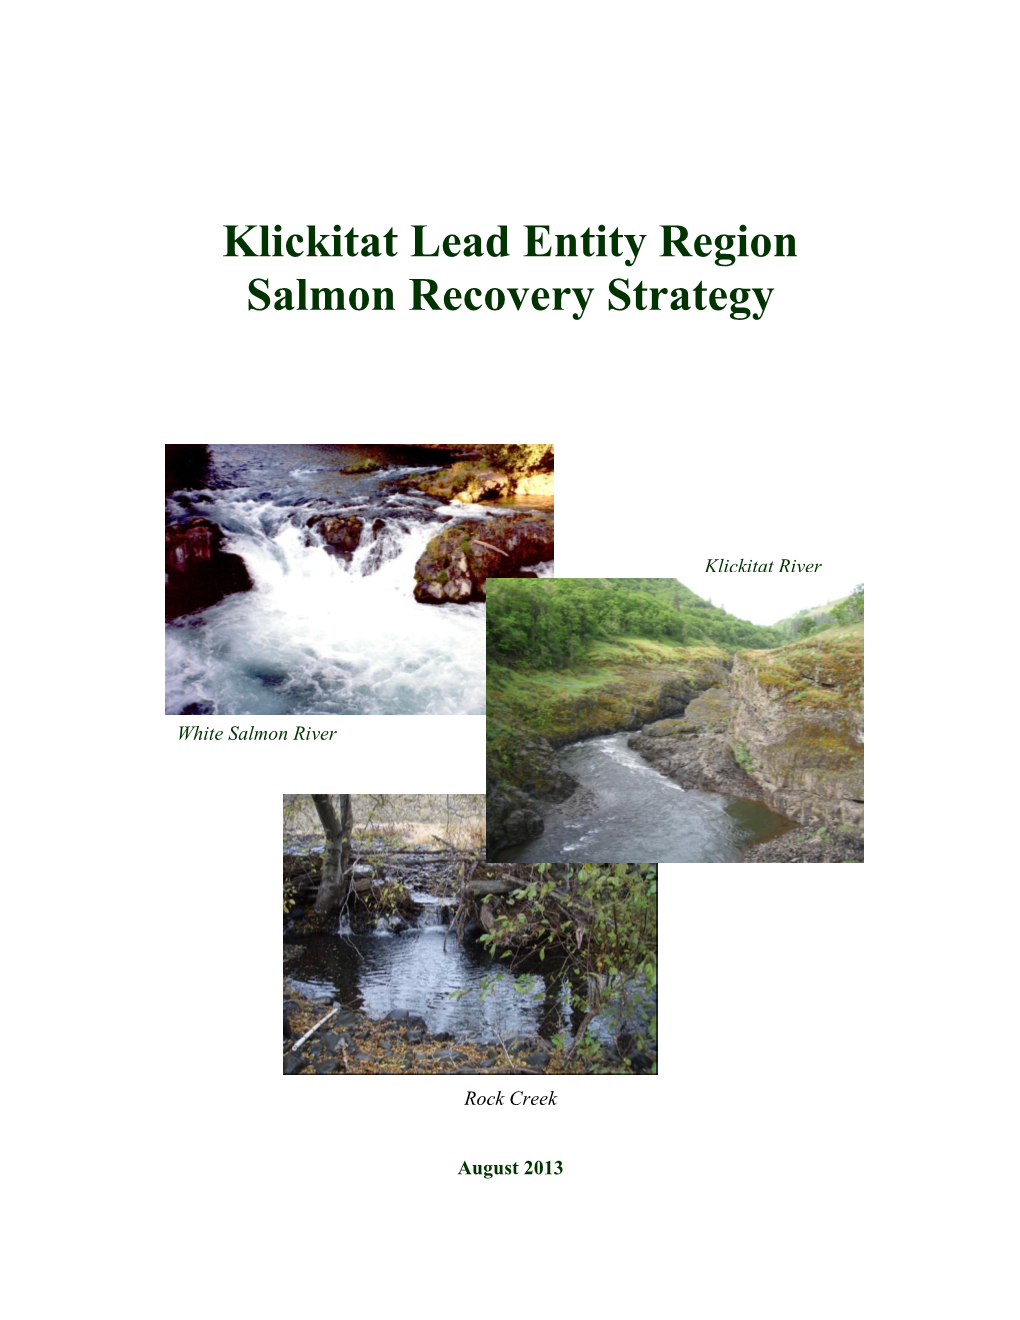 Klickitat Lead Entity Region Salmon Recovery Strategy